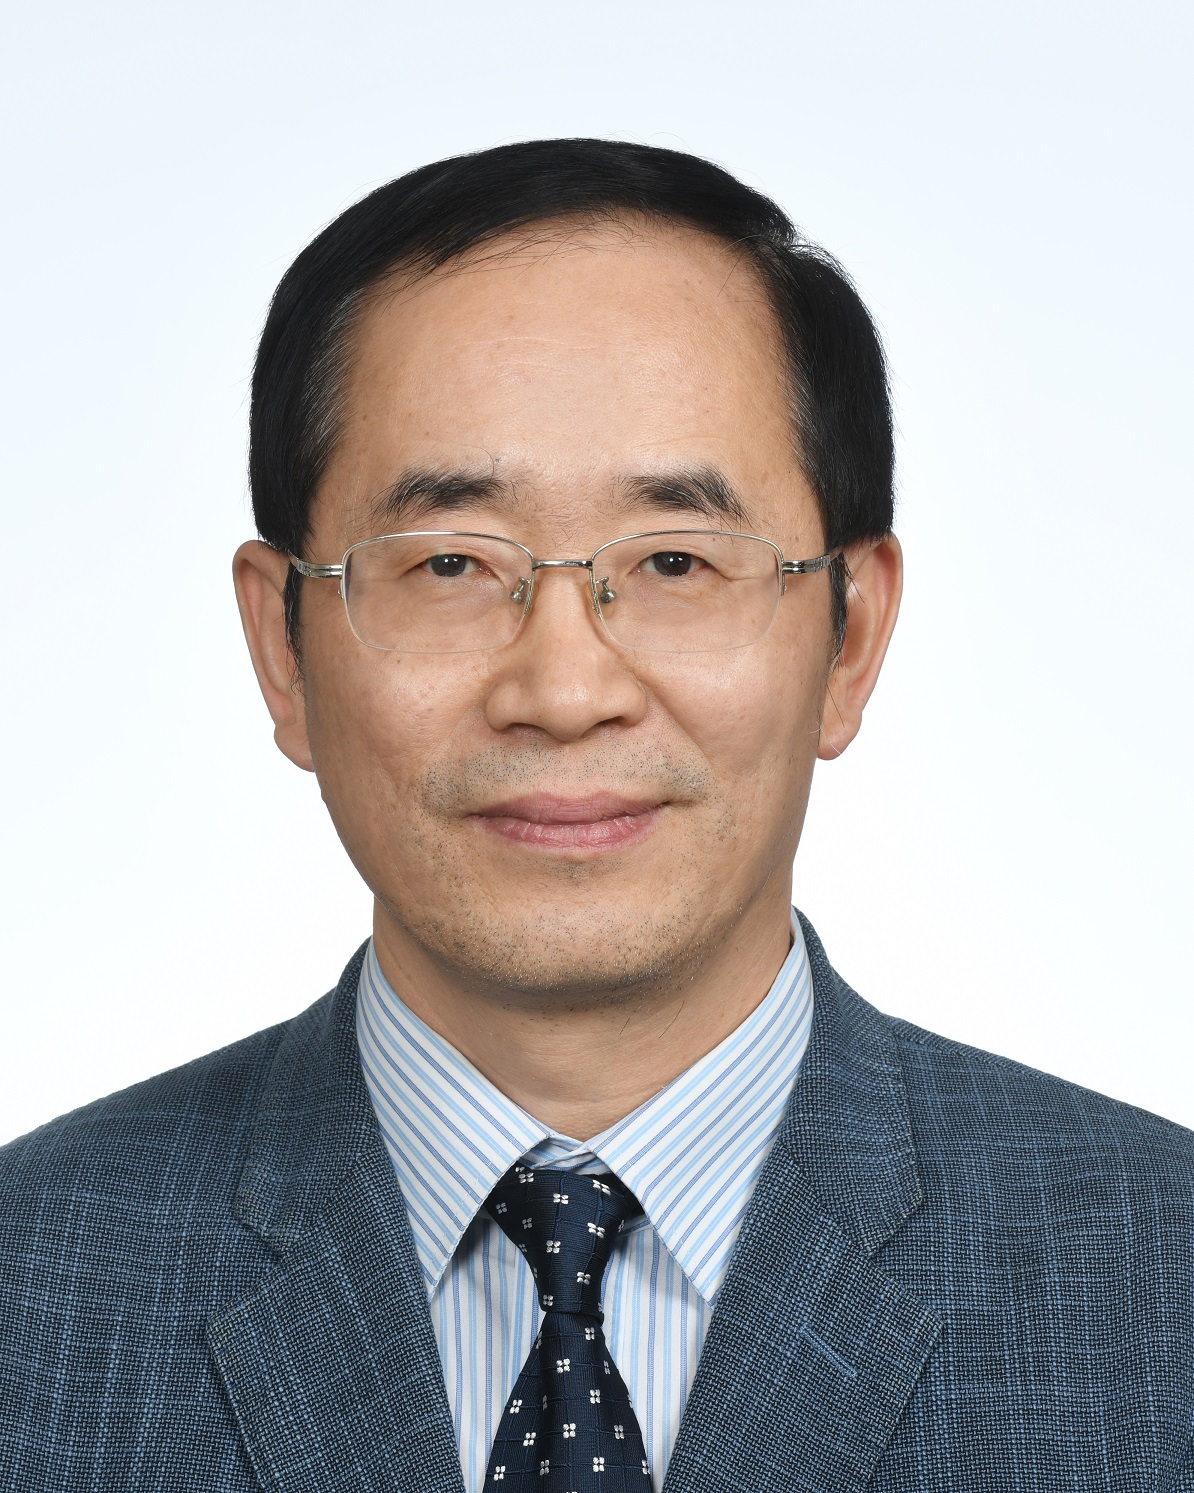 Zhenfeng Xi (席振峰), Ph.D.